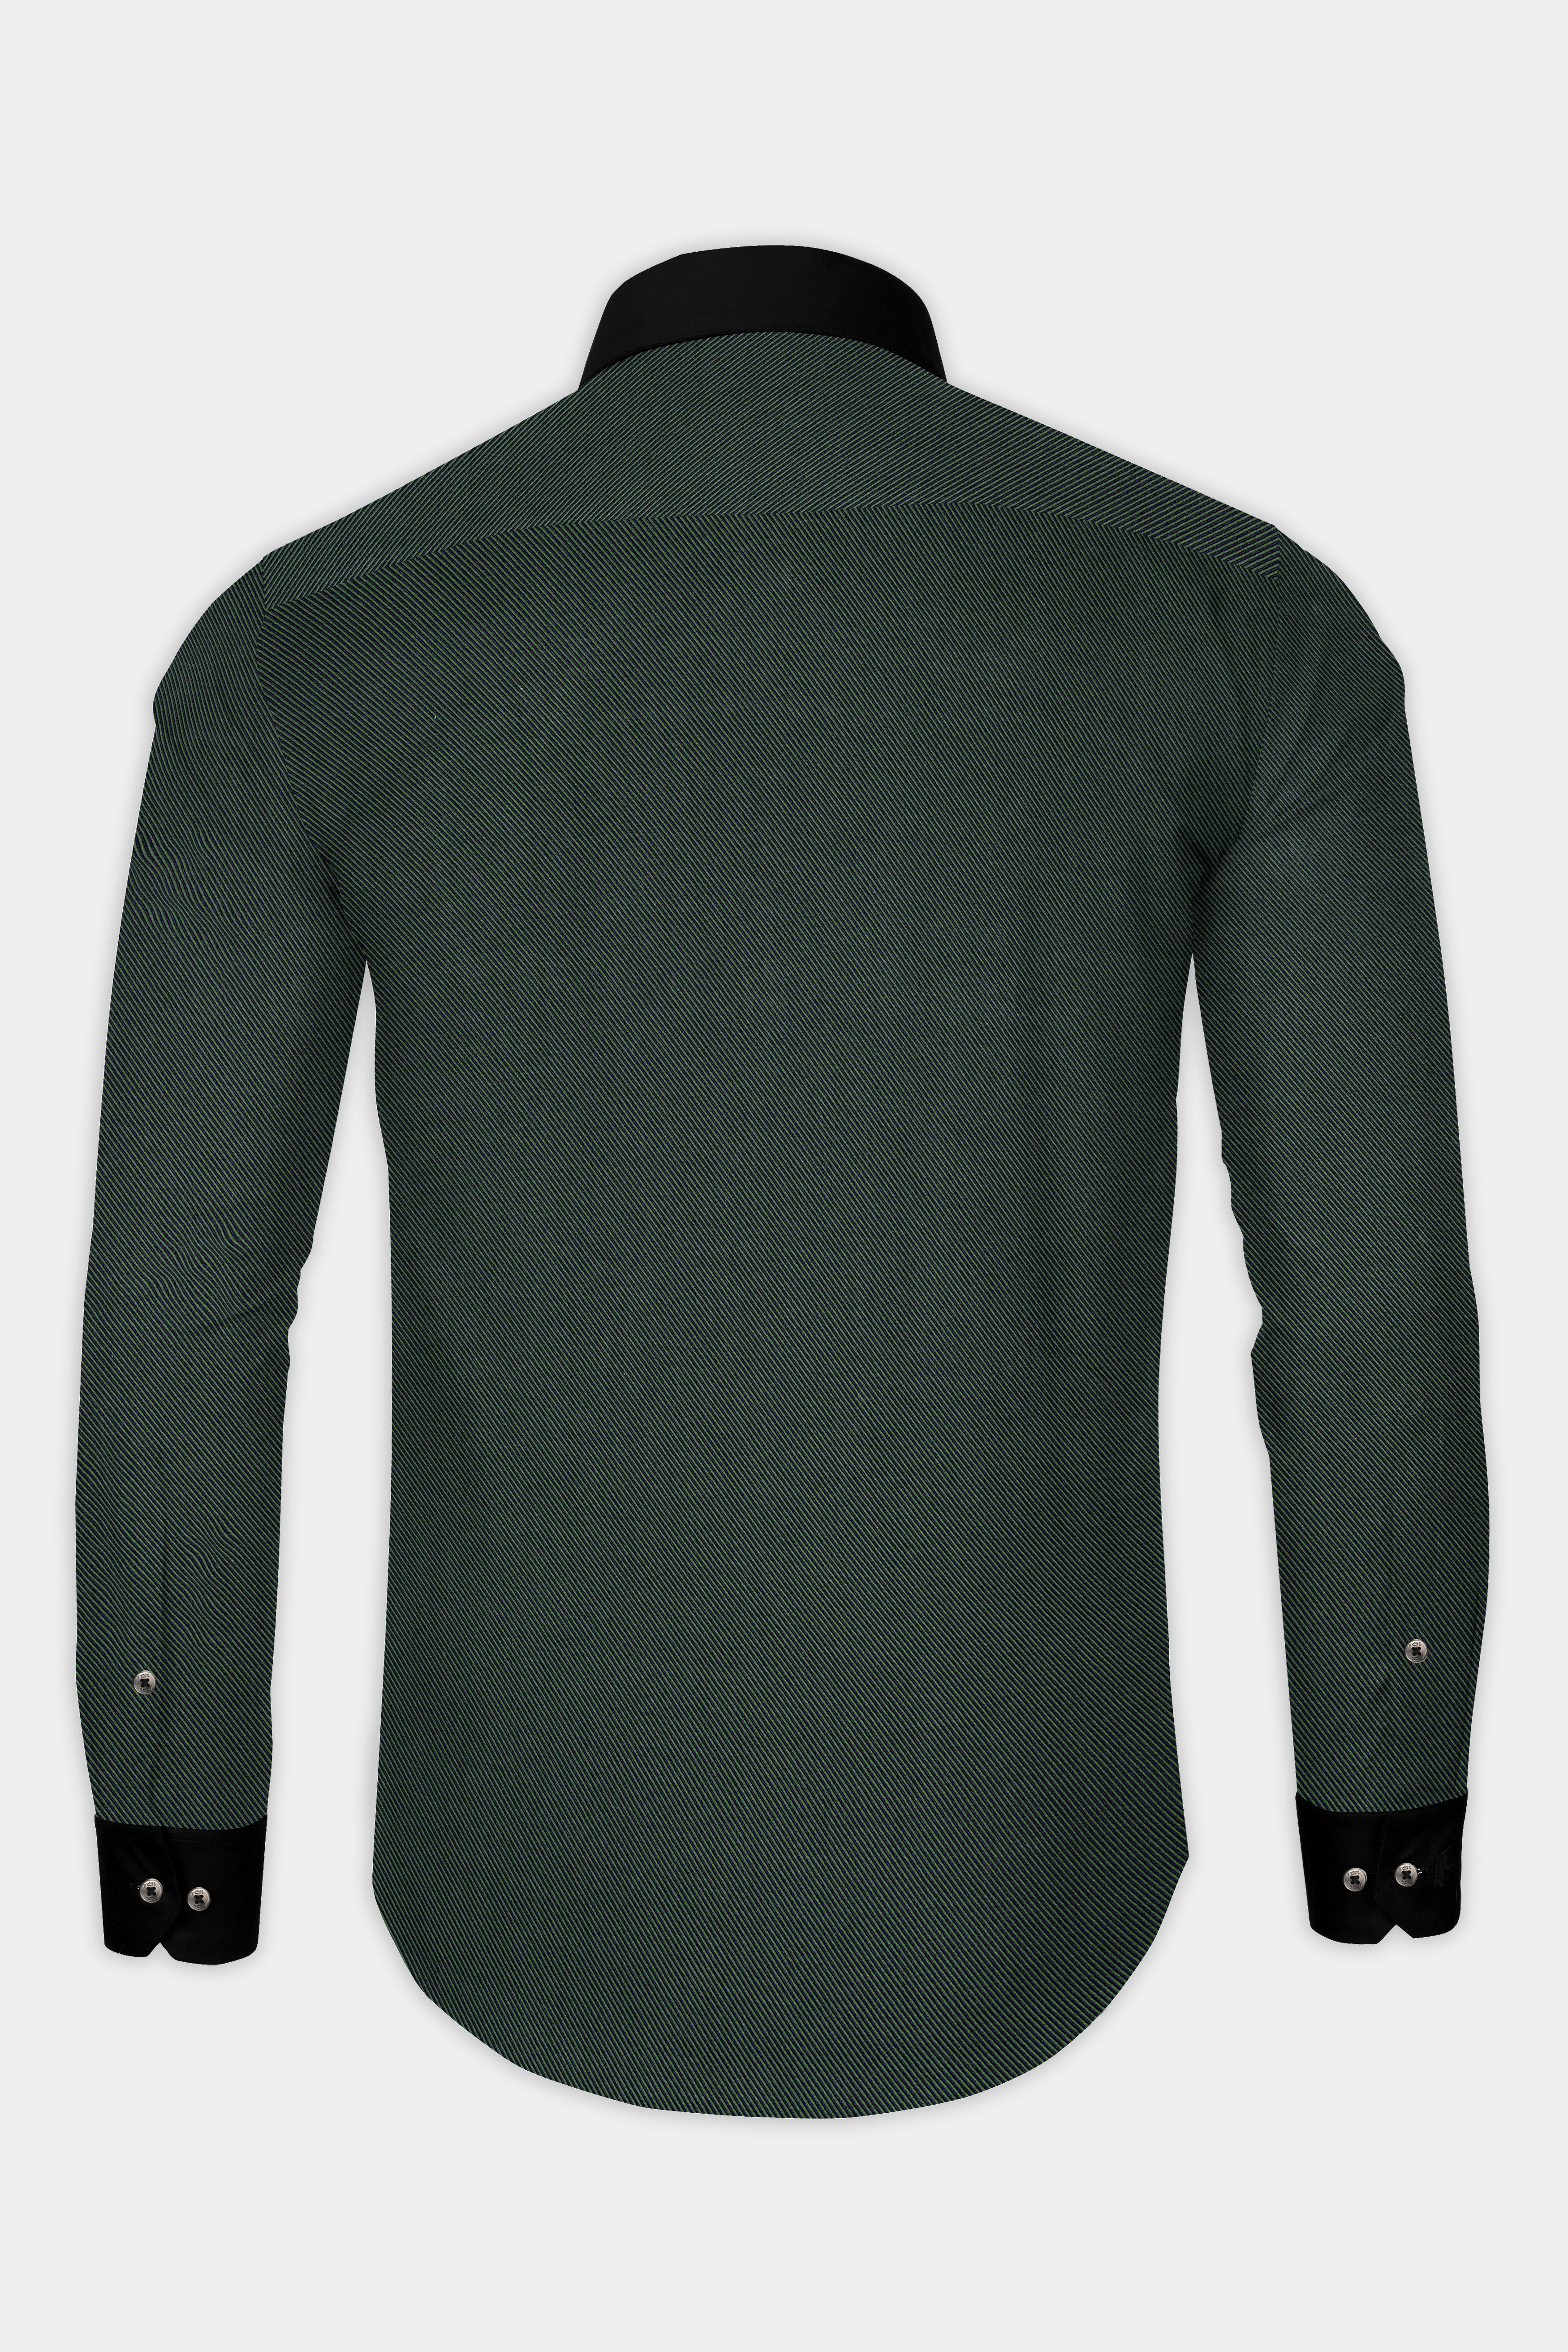 Racing Green Textured Twill Giza Cotton Shirt